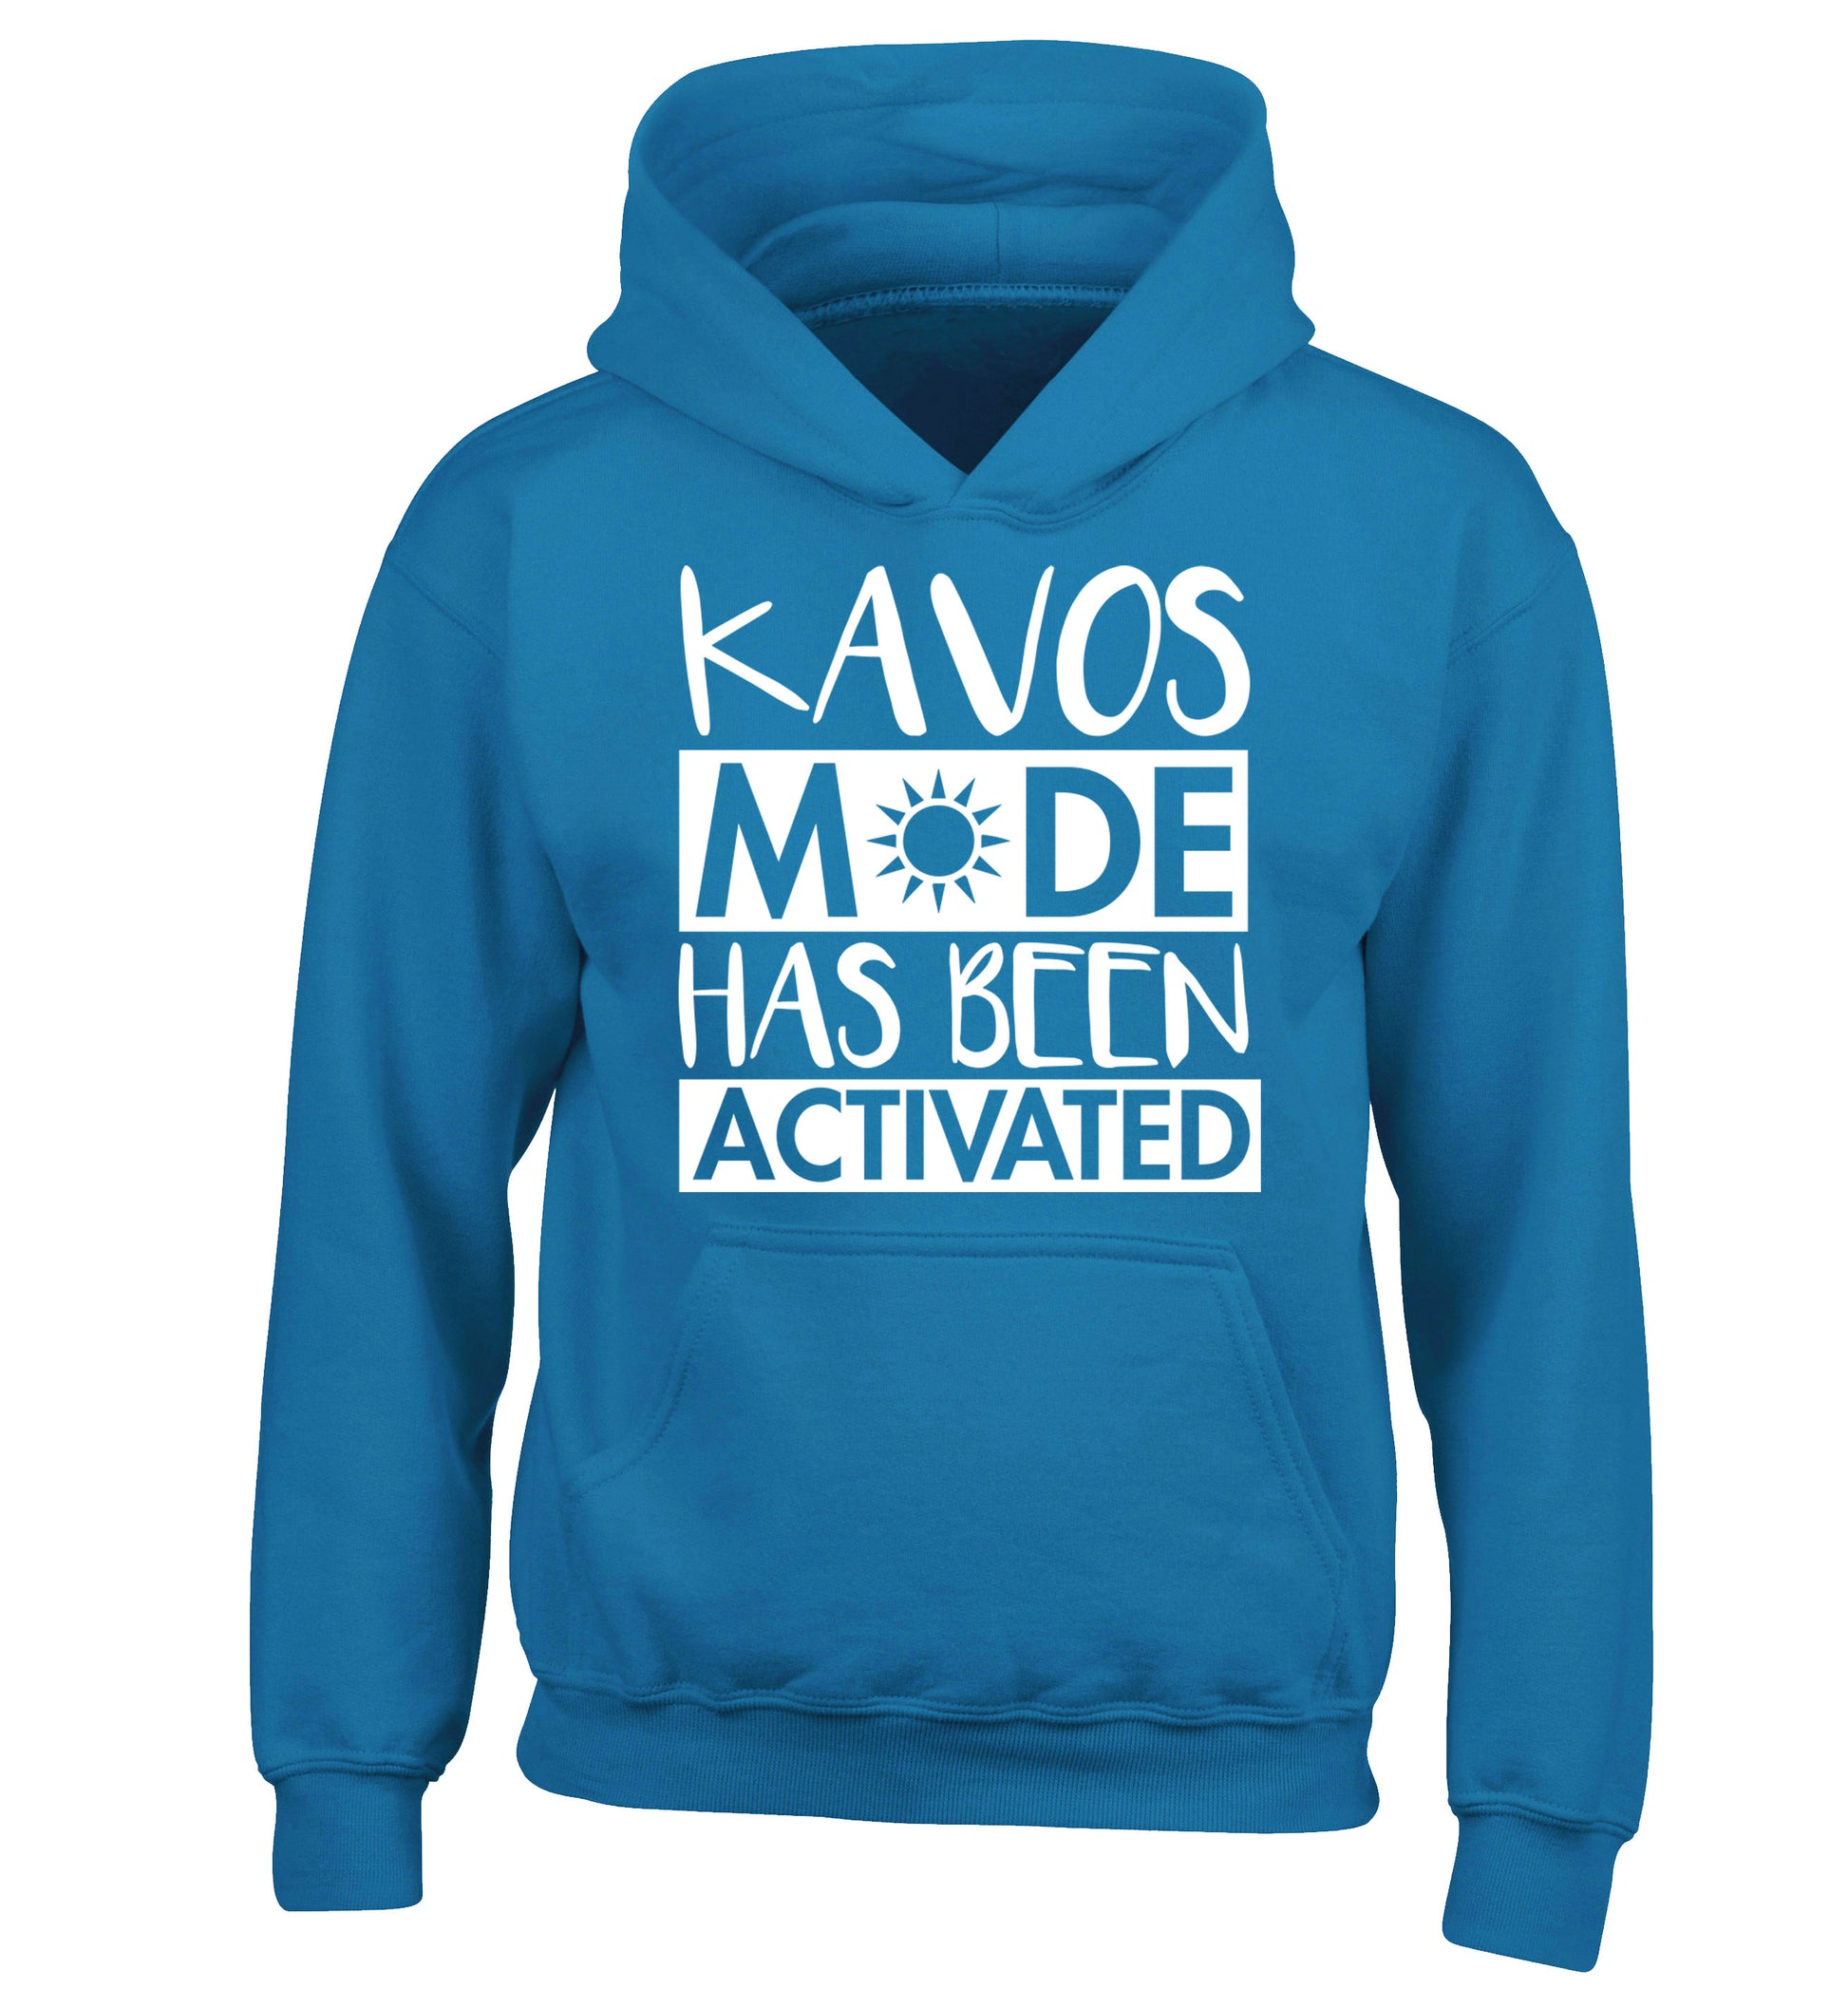 Kavos mode has been activated children's blue hoodie 12-14 Years